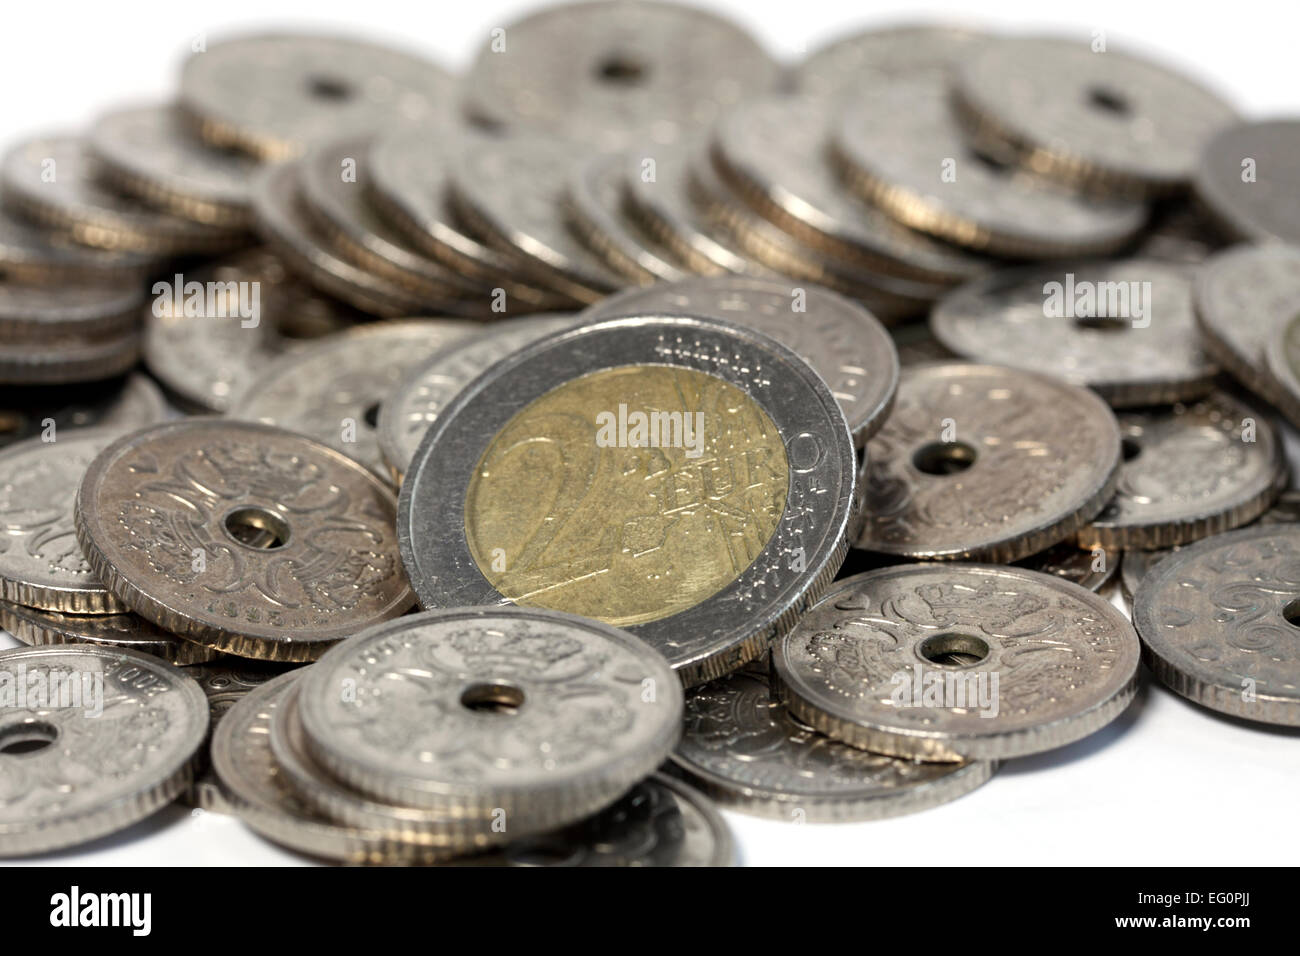 Euros balancing in the midst of Danish Kroner. A 2 Euro piece in the midst of Danish 1 Krone pieces on white. Stock Photo